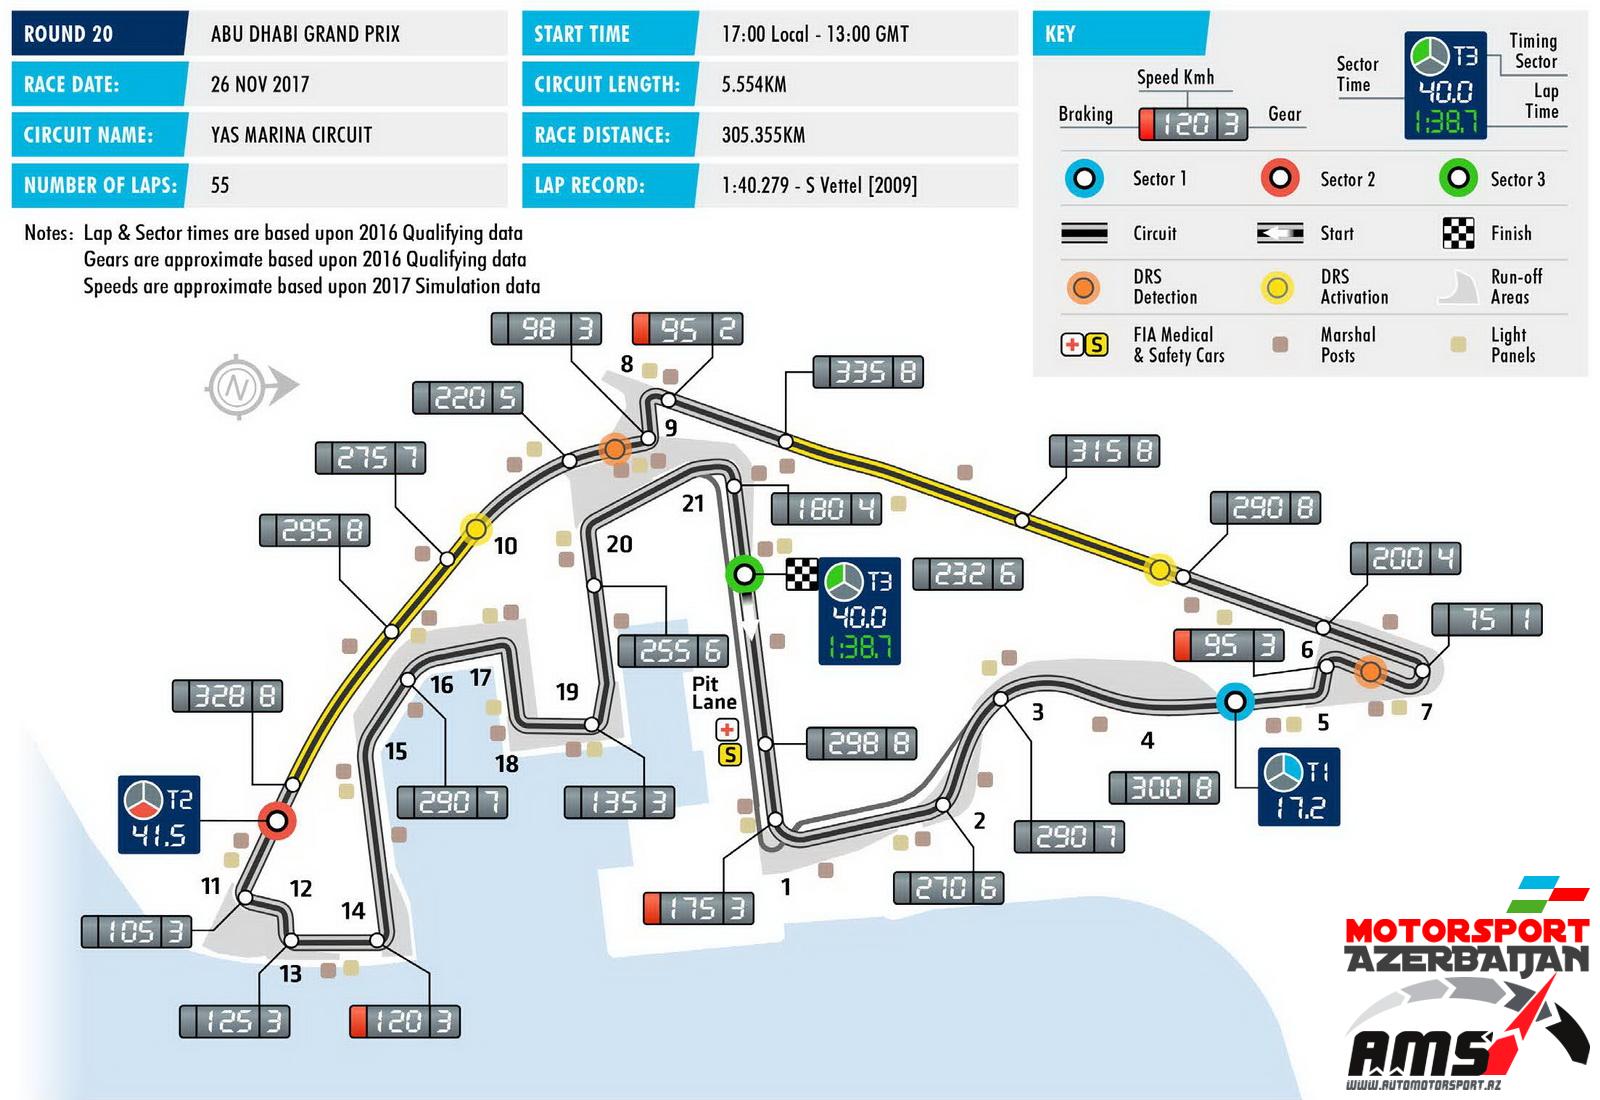 Abu Dhabi Grand Prix, DRS